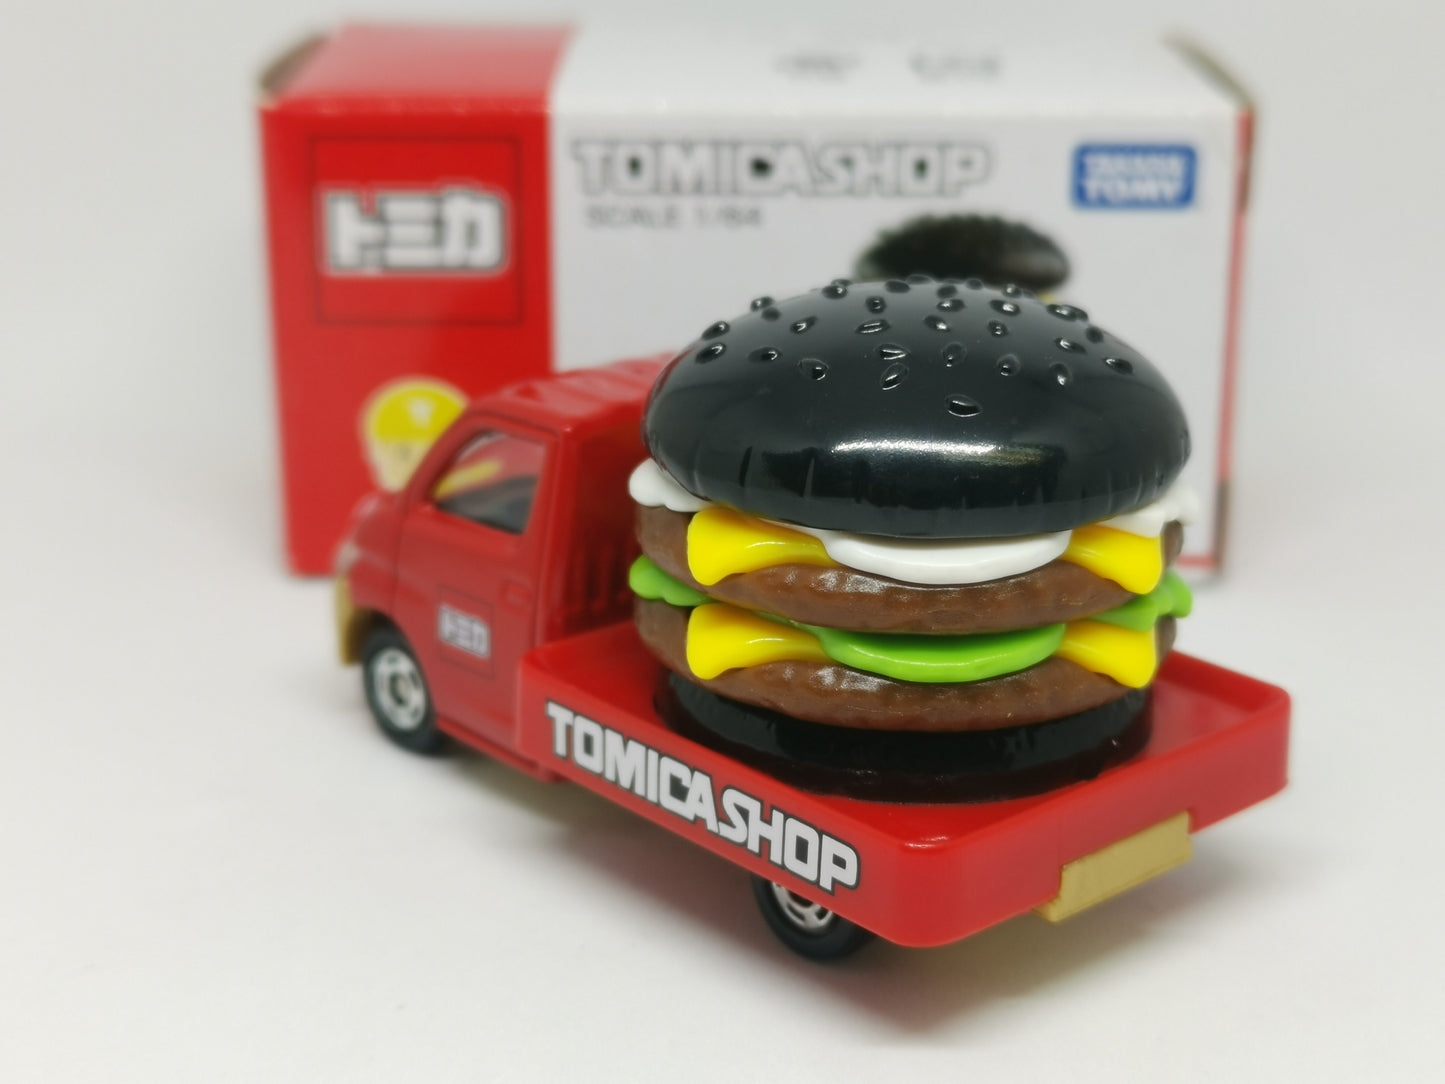 Japan Tomica Shop Exclusive Toyota Town Ace Hamburger broadcasting van